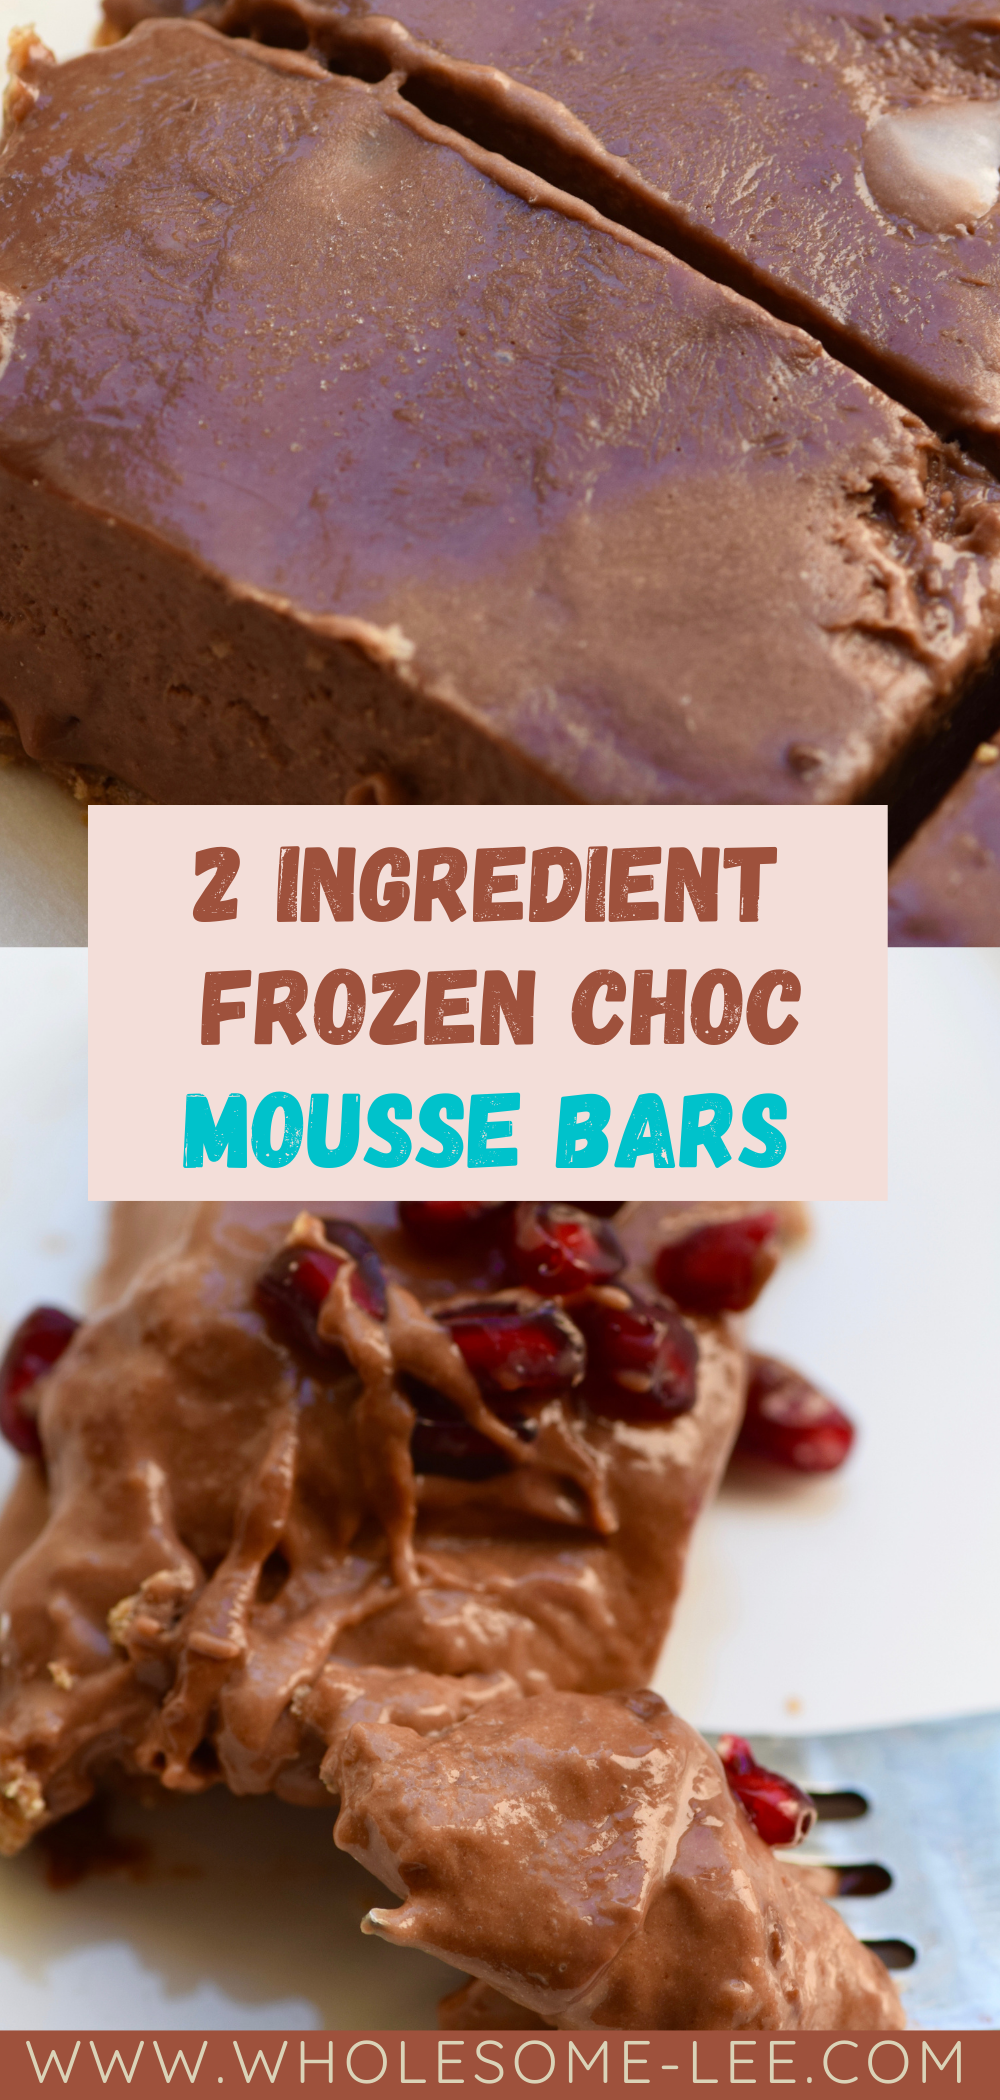 2 ingredient frozen choc mousse bars